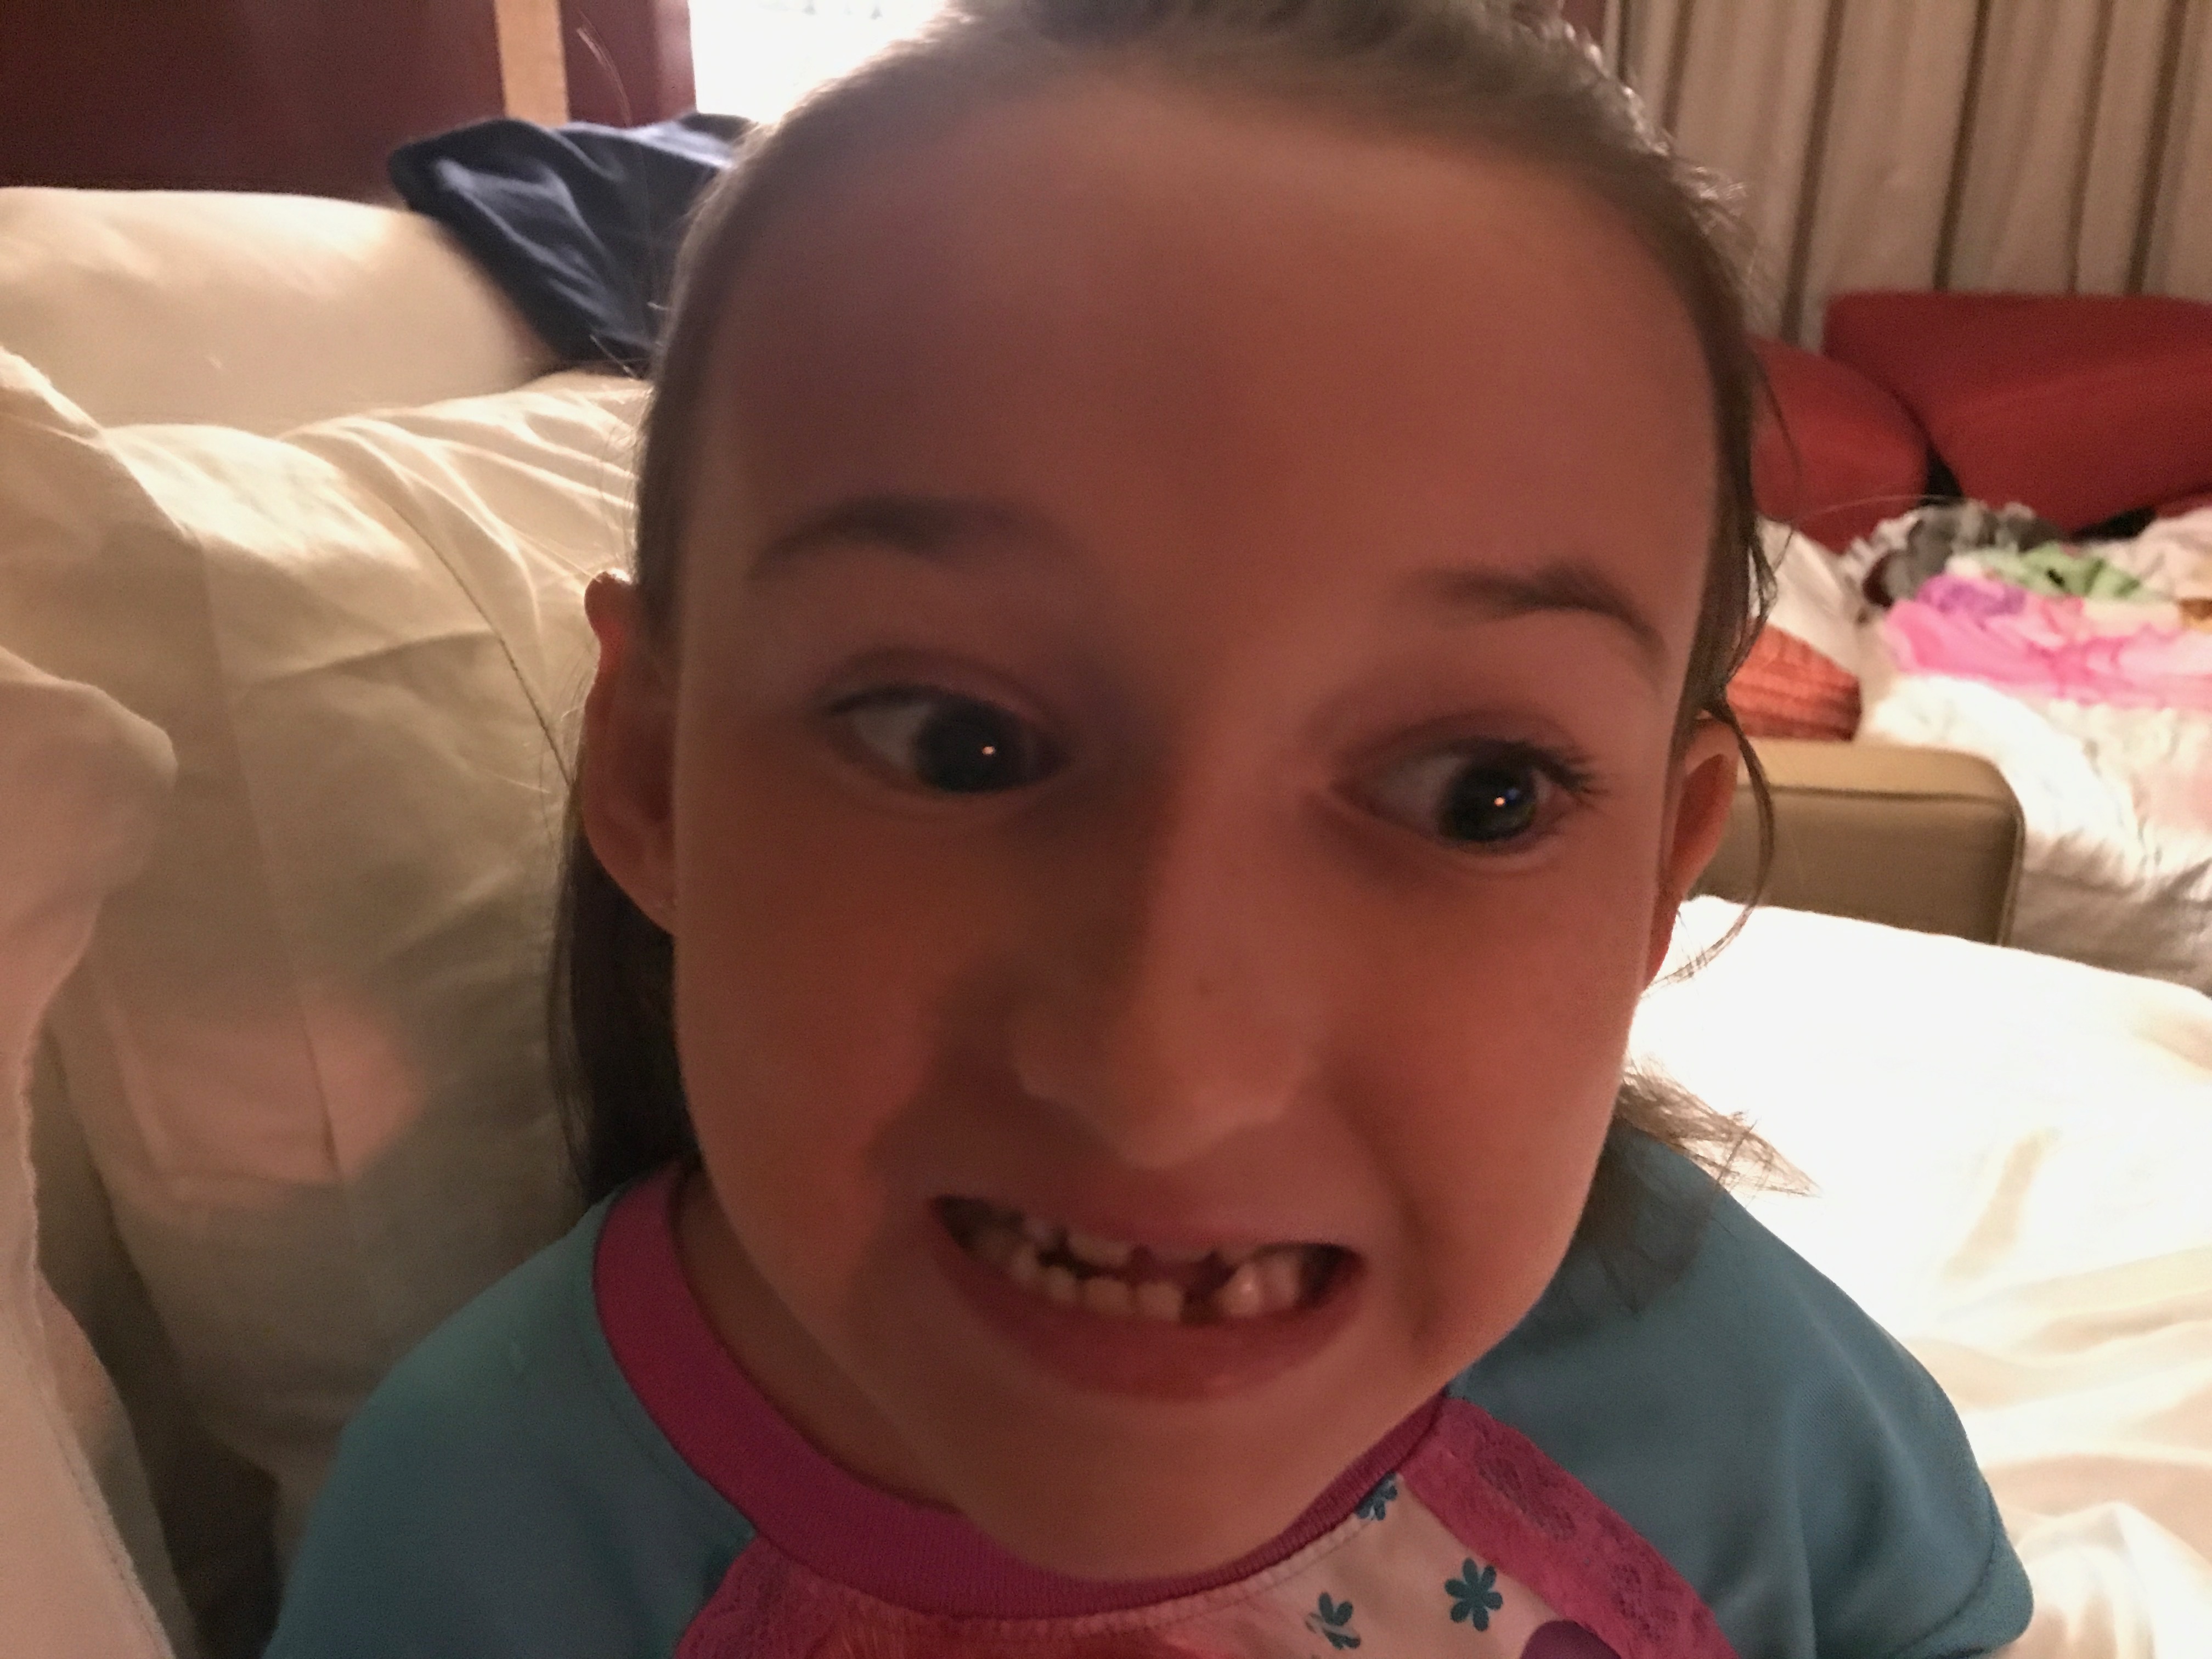 She lost her 5th Tooth on Disney's Magic Kingdom Splash Mountain